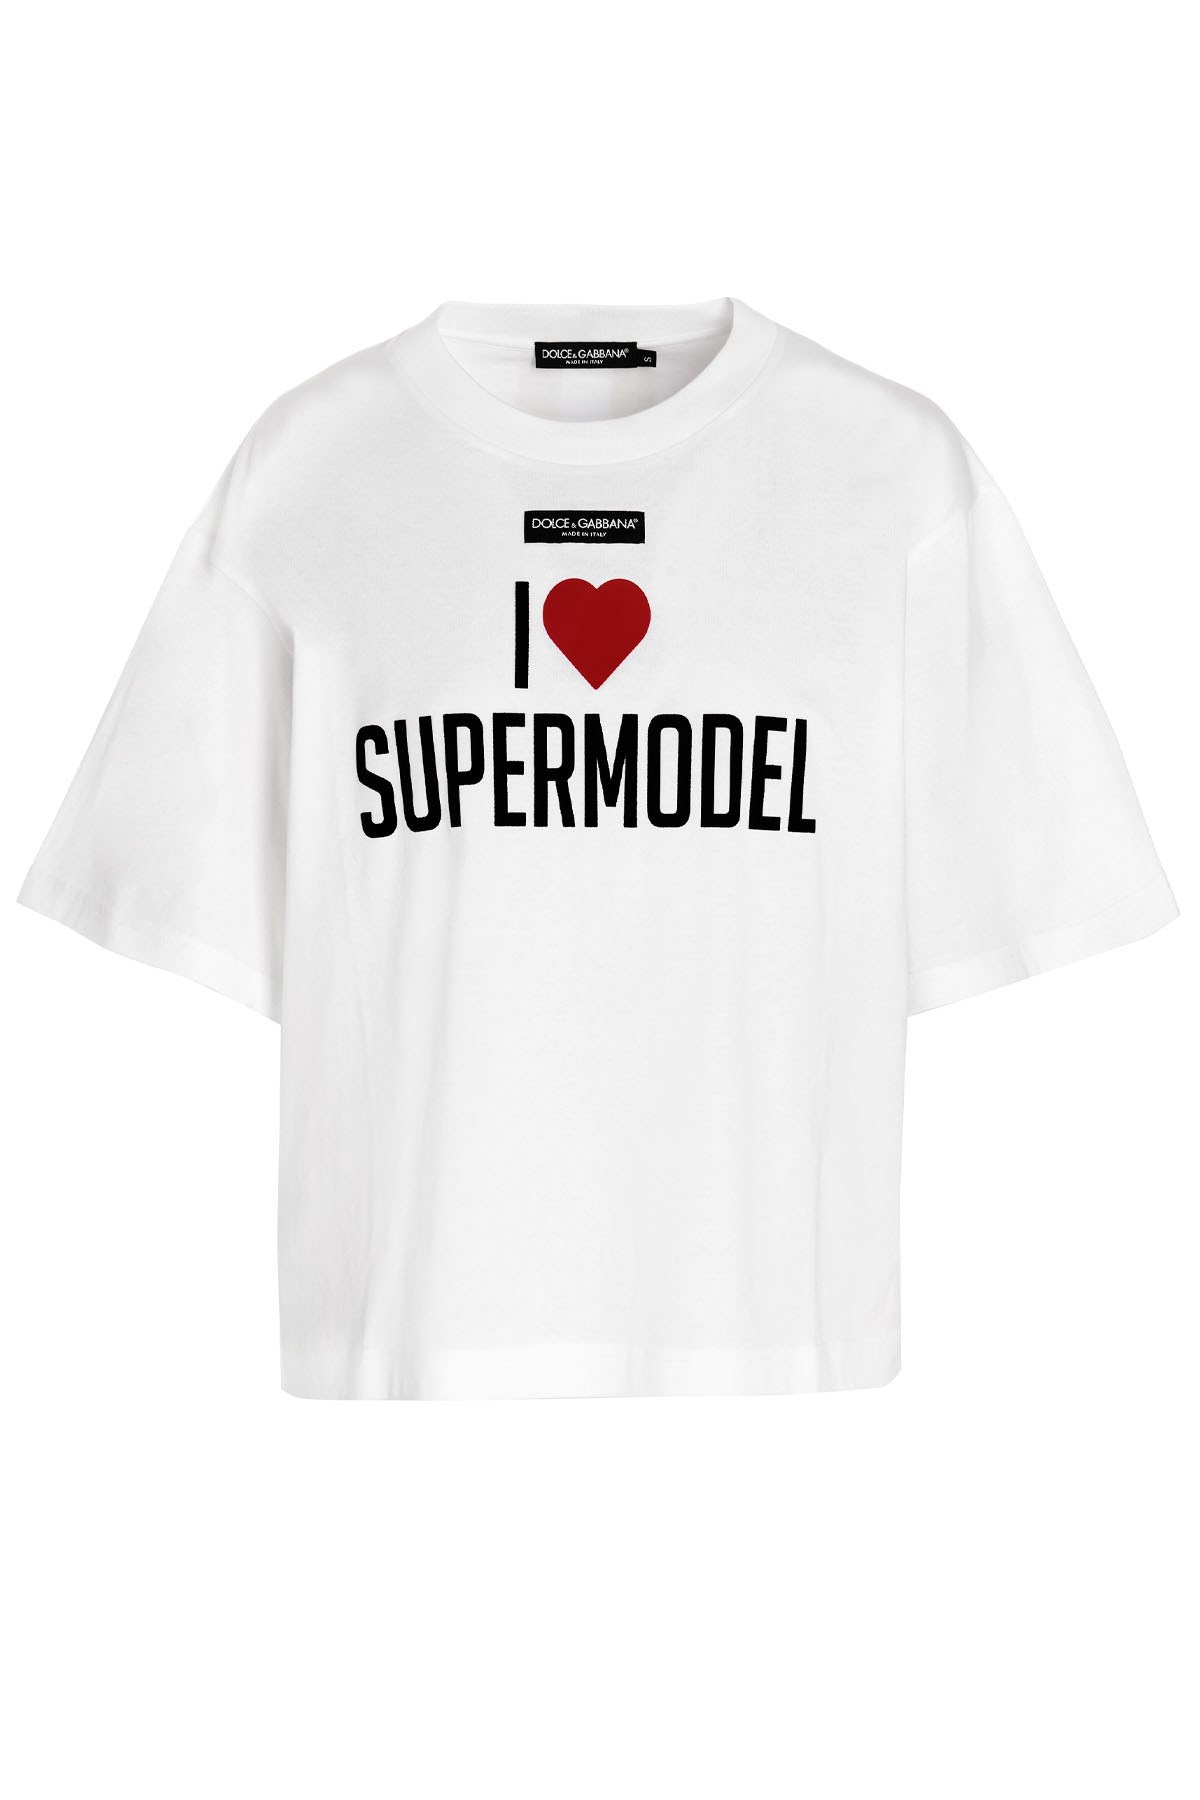 DOLCE & GABBANA 'Supermodel' Printed T-Shirt